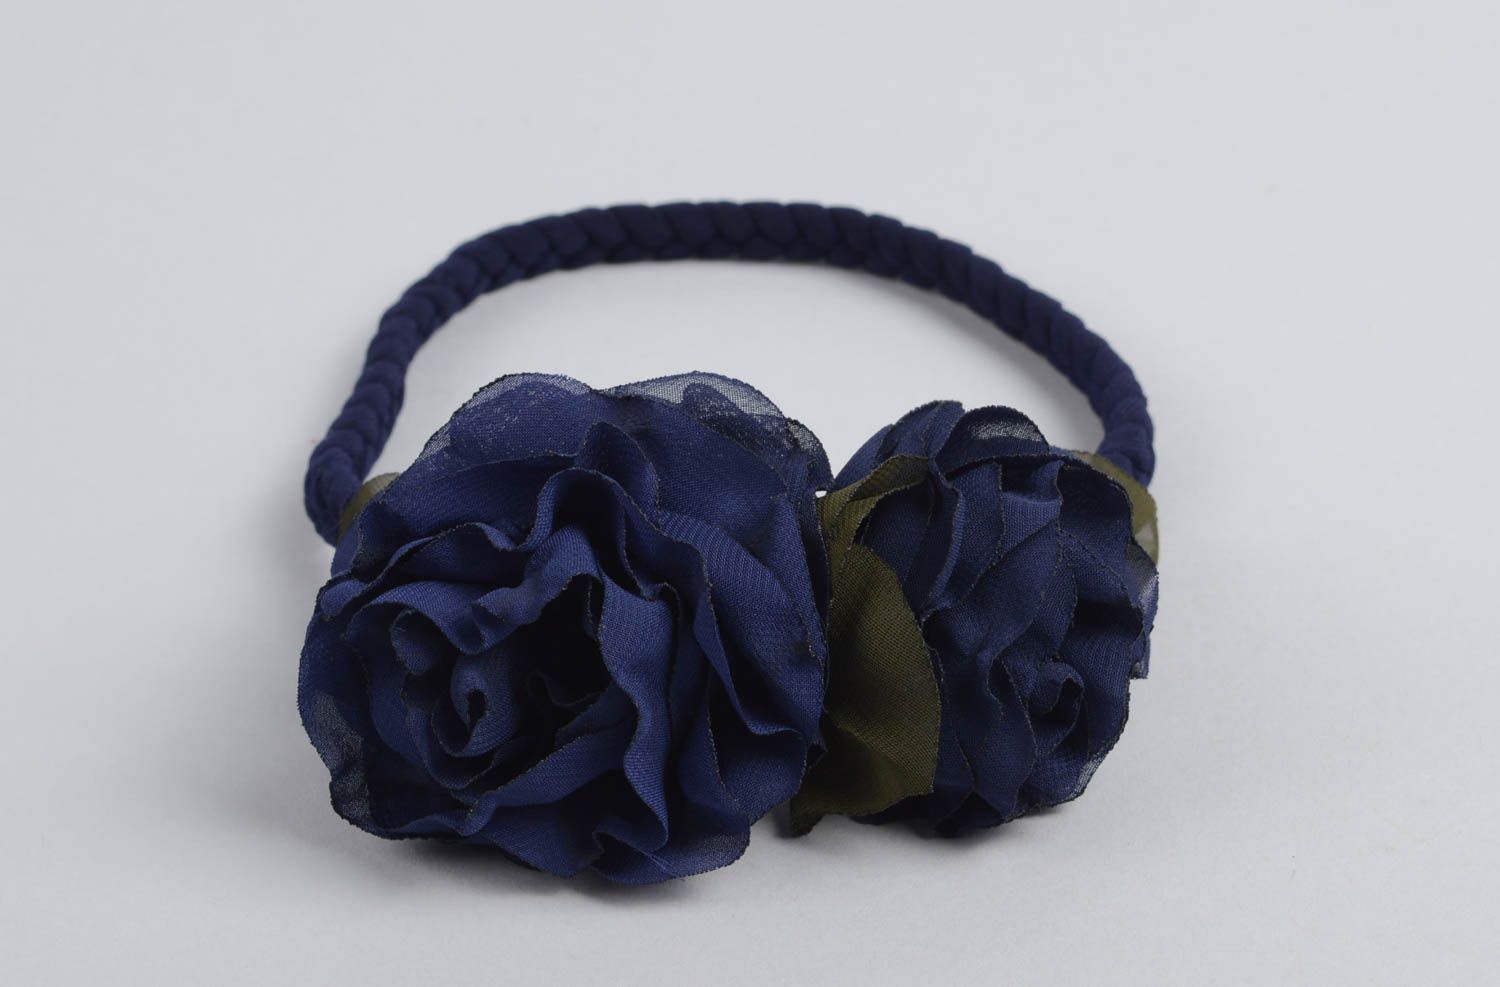 Handmade textile flower headband designer hair accessories gifts for her photo 1